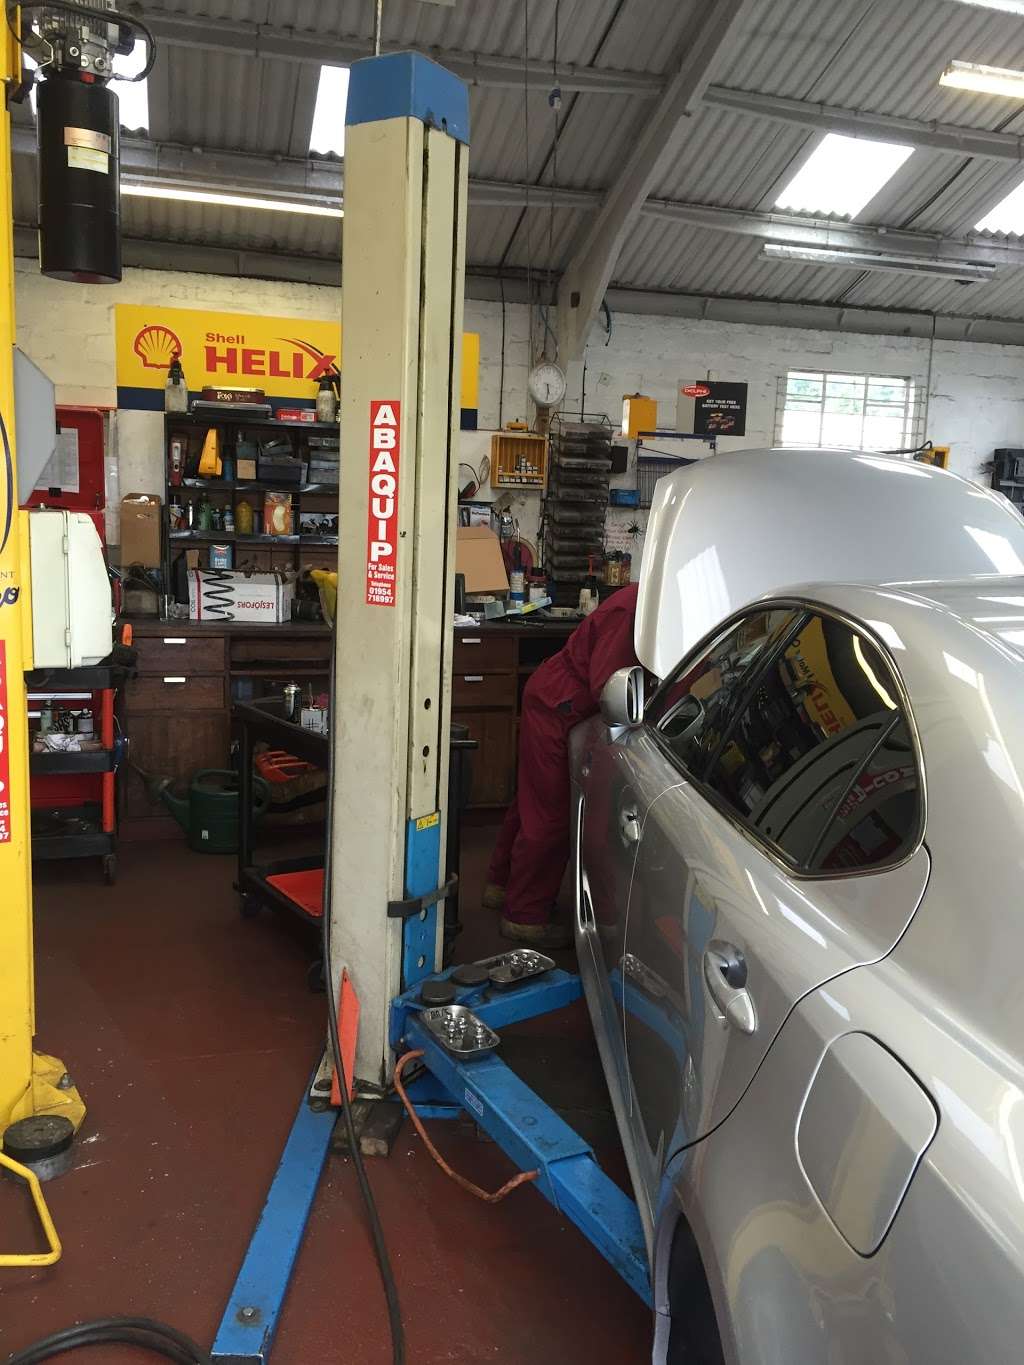 Brian Martin (motor vehicle repairs) | Cadmore Ln, Cheshunt, Waltham Cross EN8 9SA, UK | Phone: 01992 308080